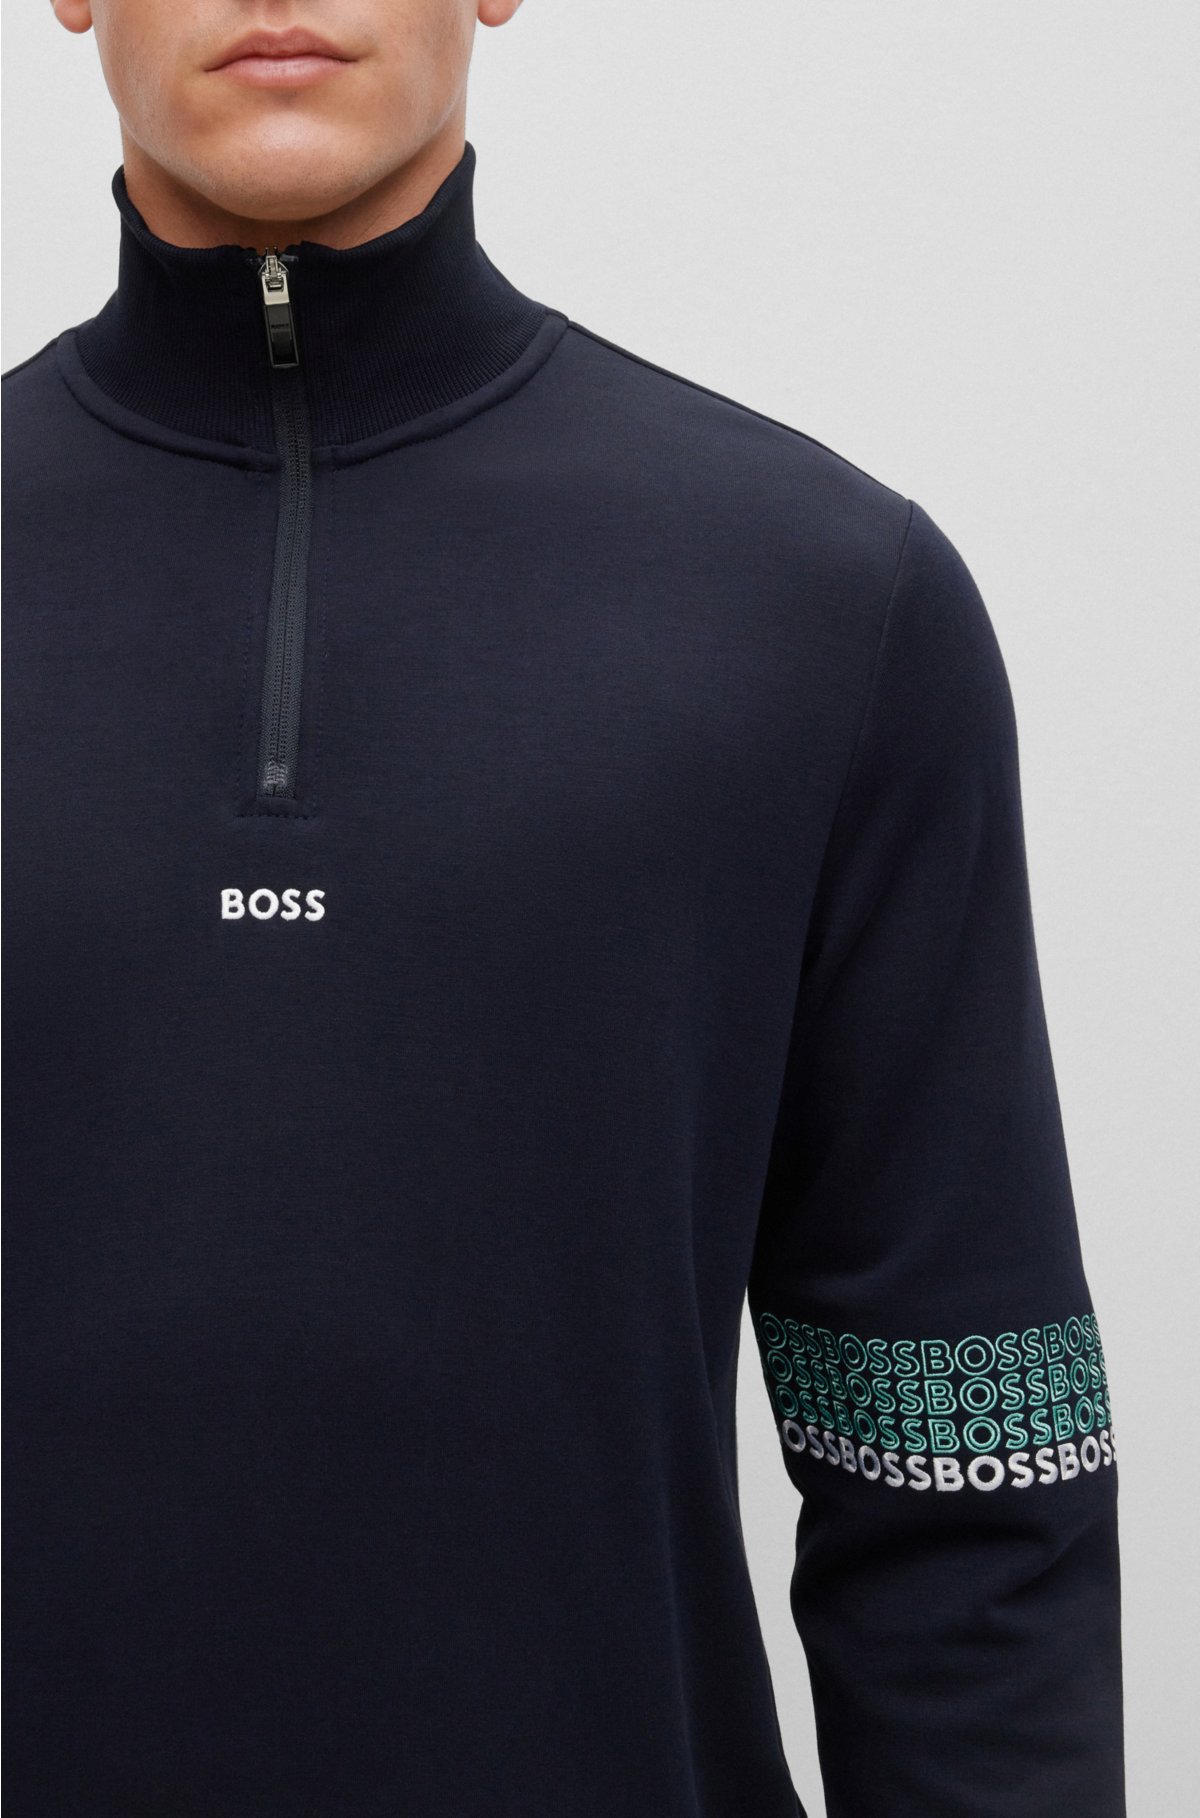 BOSS - Zip-neck sweatshirt with embroidered logos